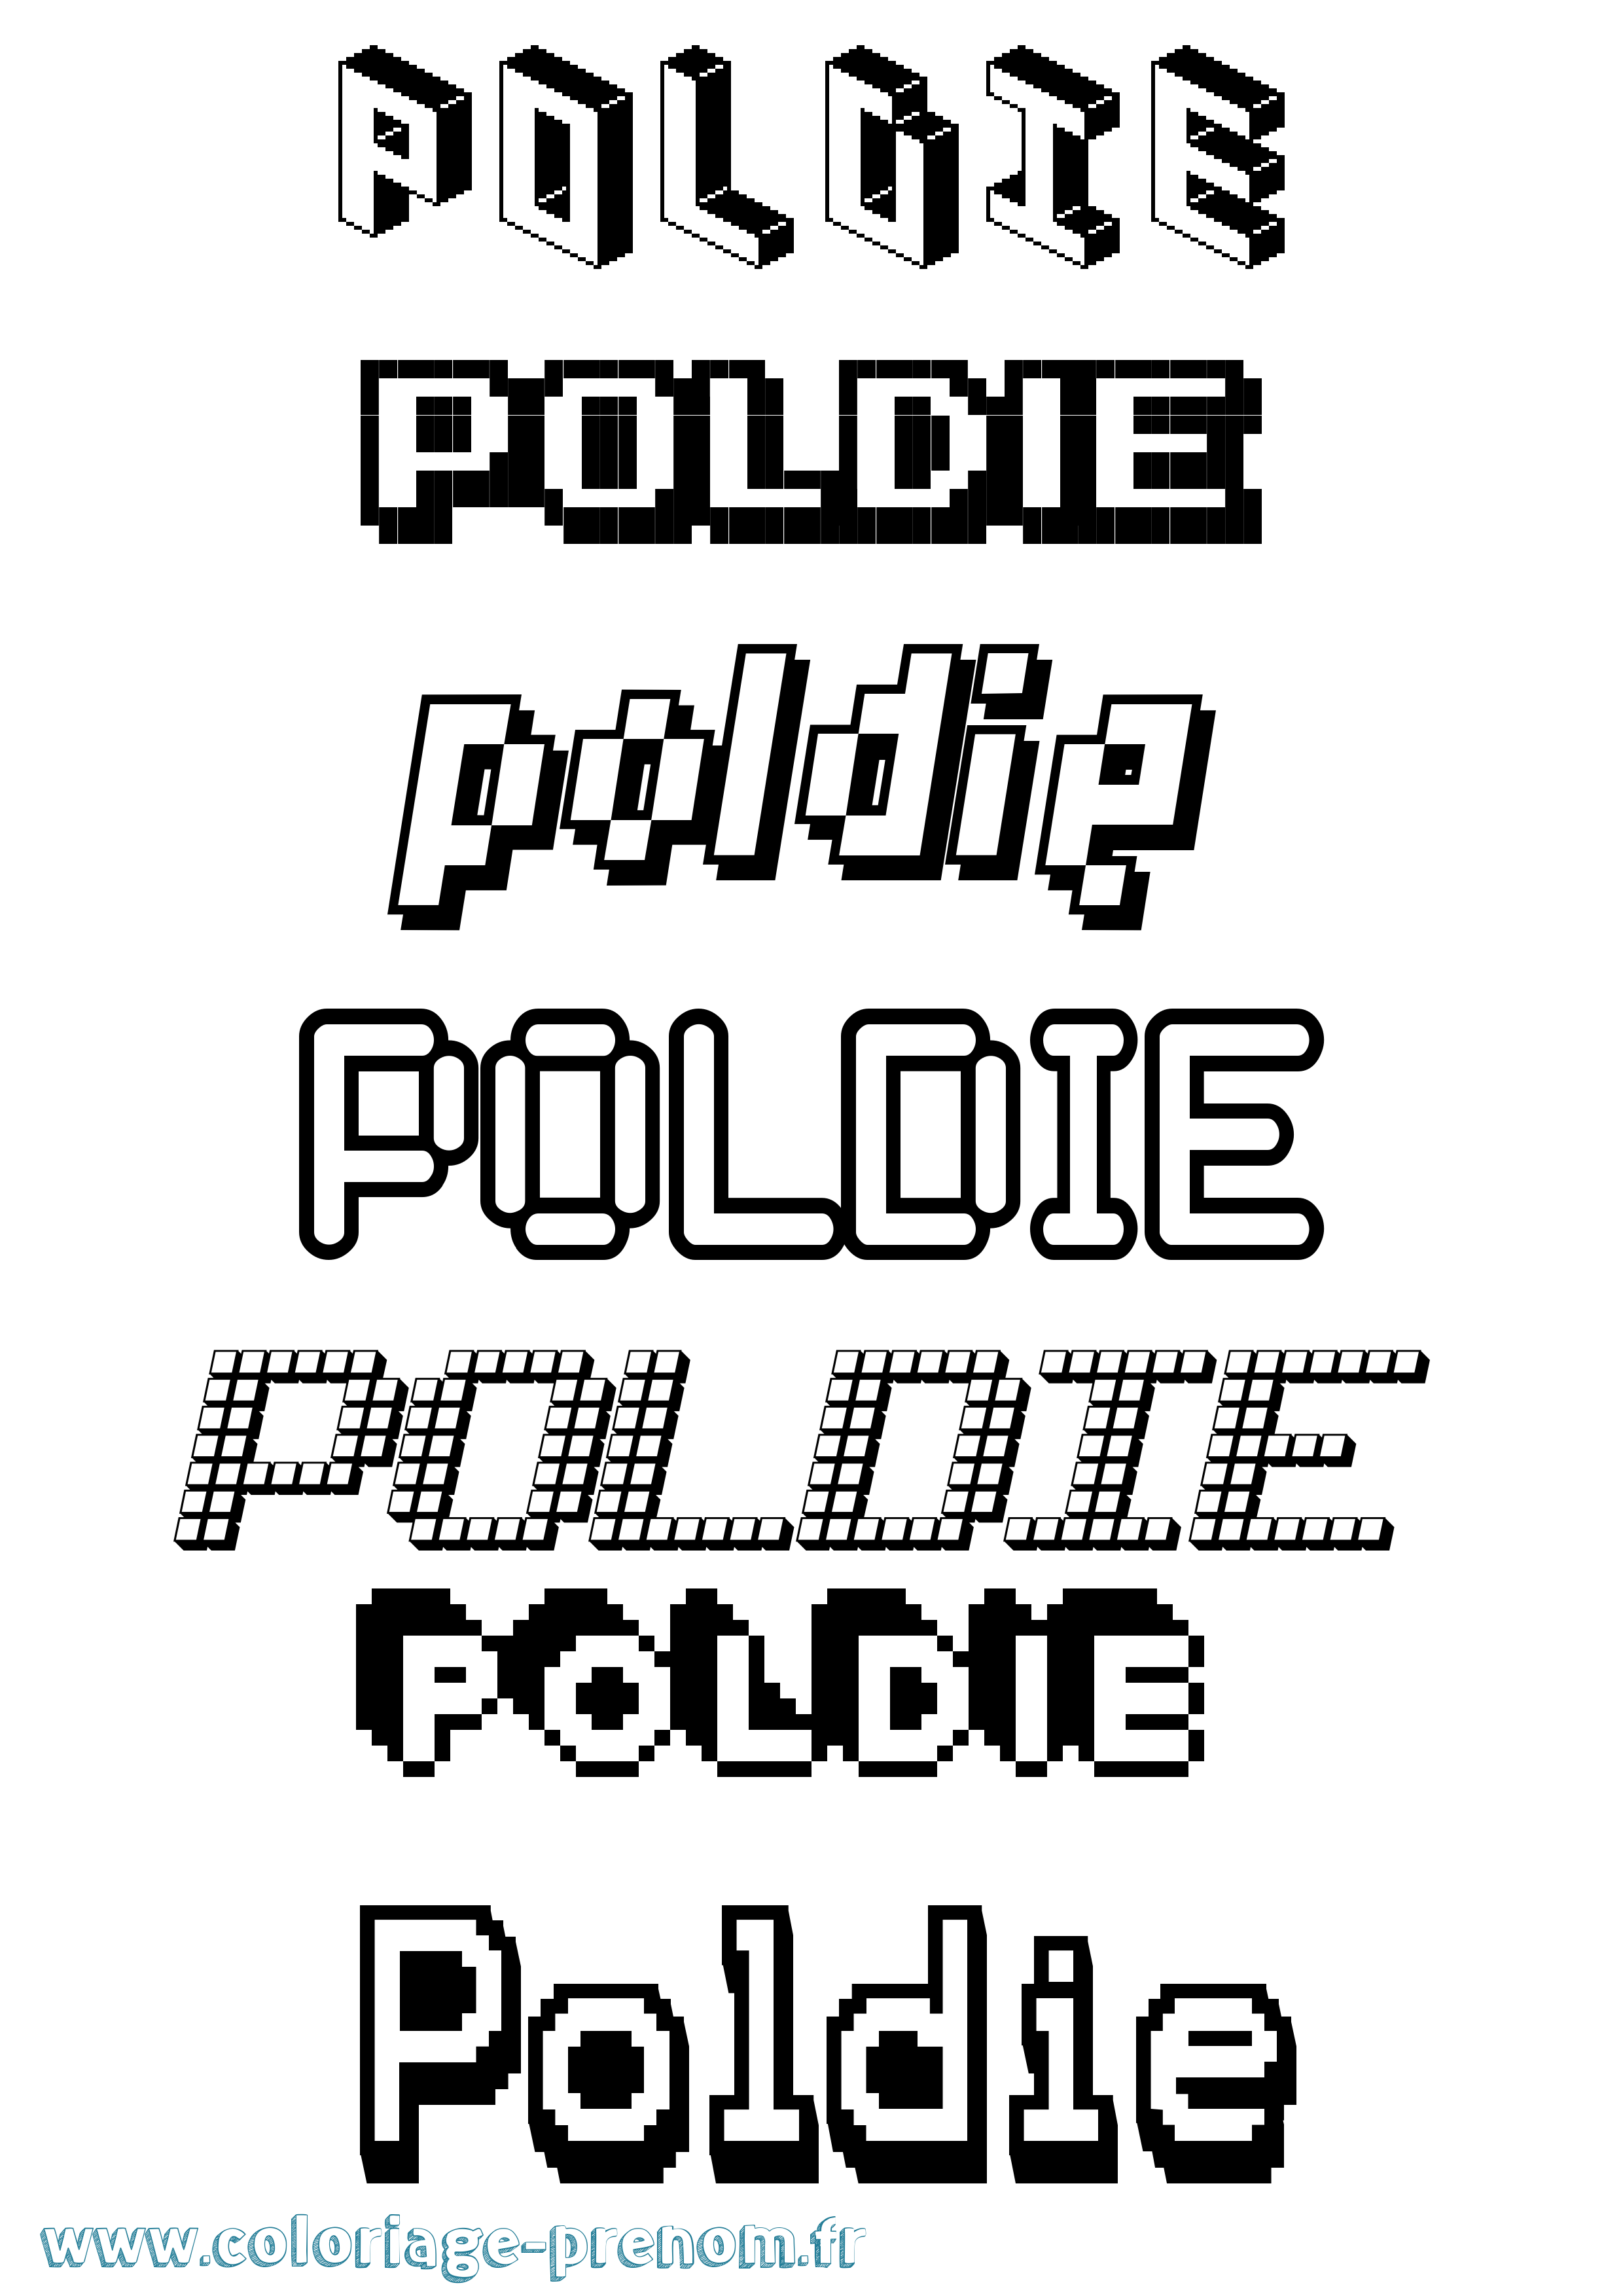 Coloriage prénom Poldie Pixel